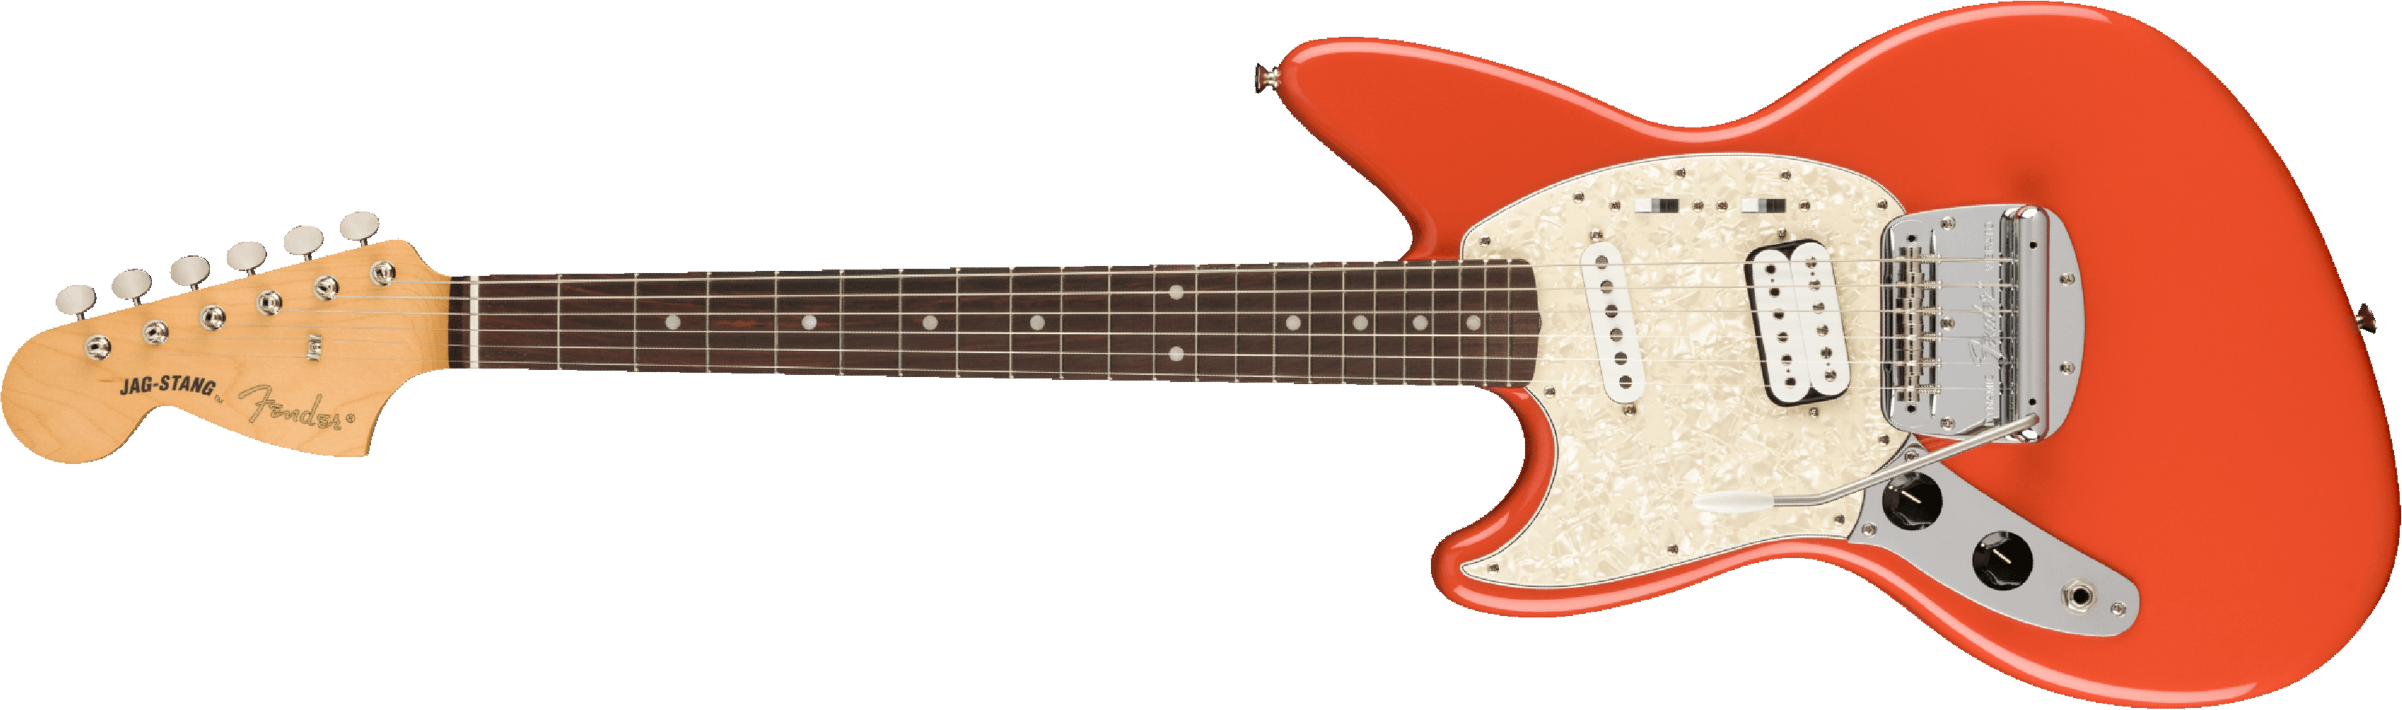 Fender Jag-stang Kurt Cobain Artist Gaucher Hs Trem Rw - Fiesta Red - Linkshandige elektrische gitaar - Main picture